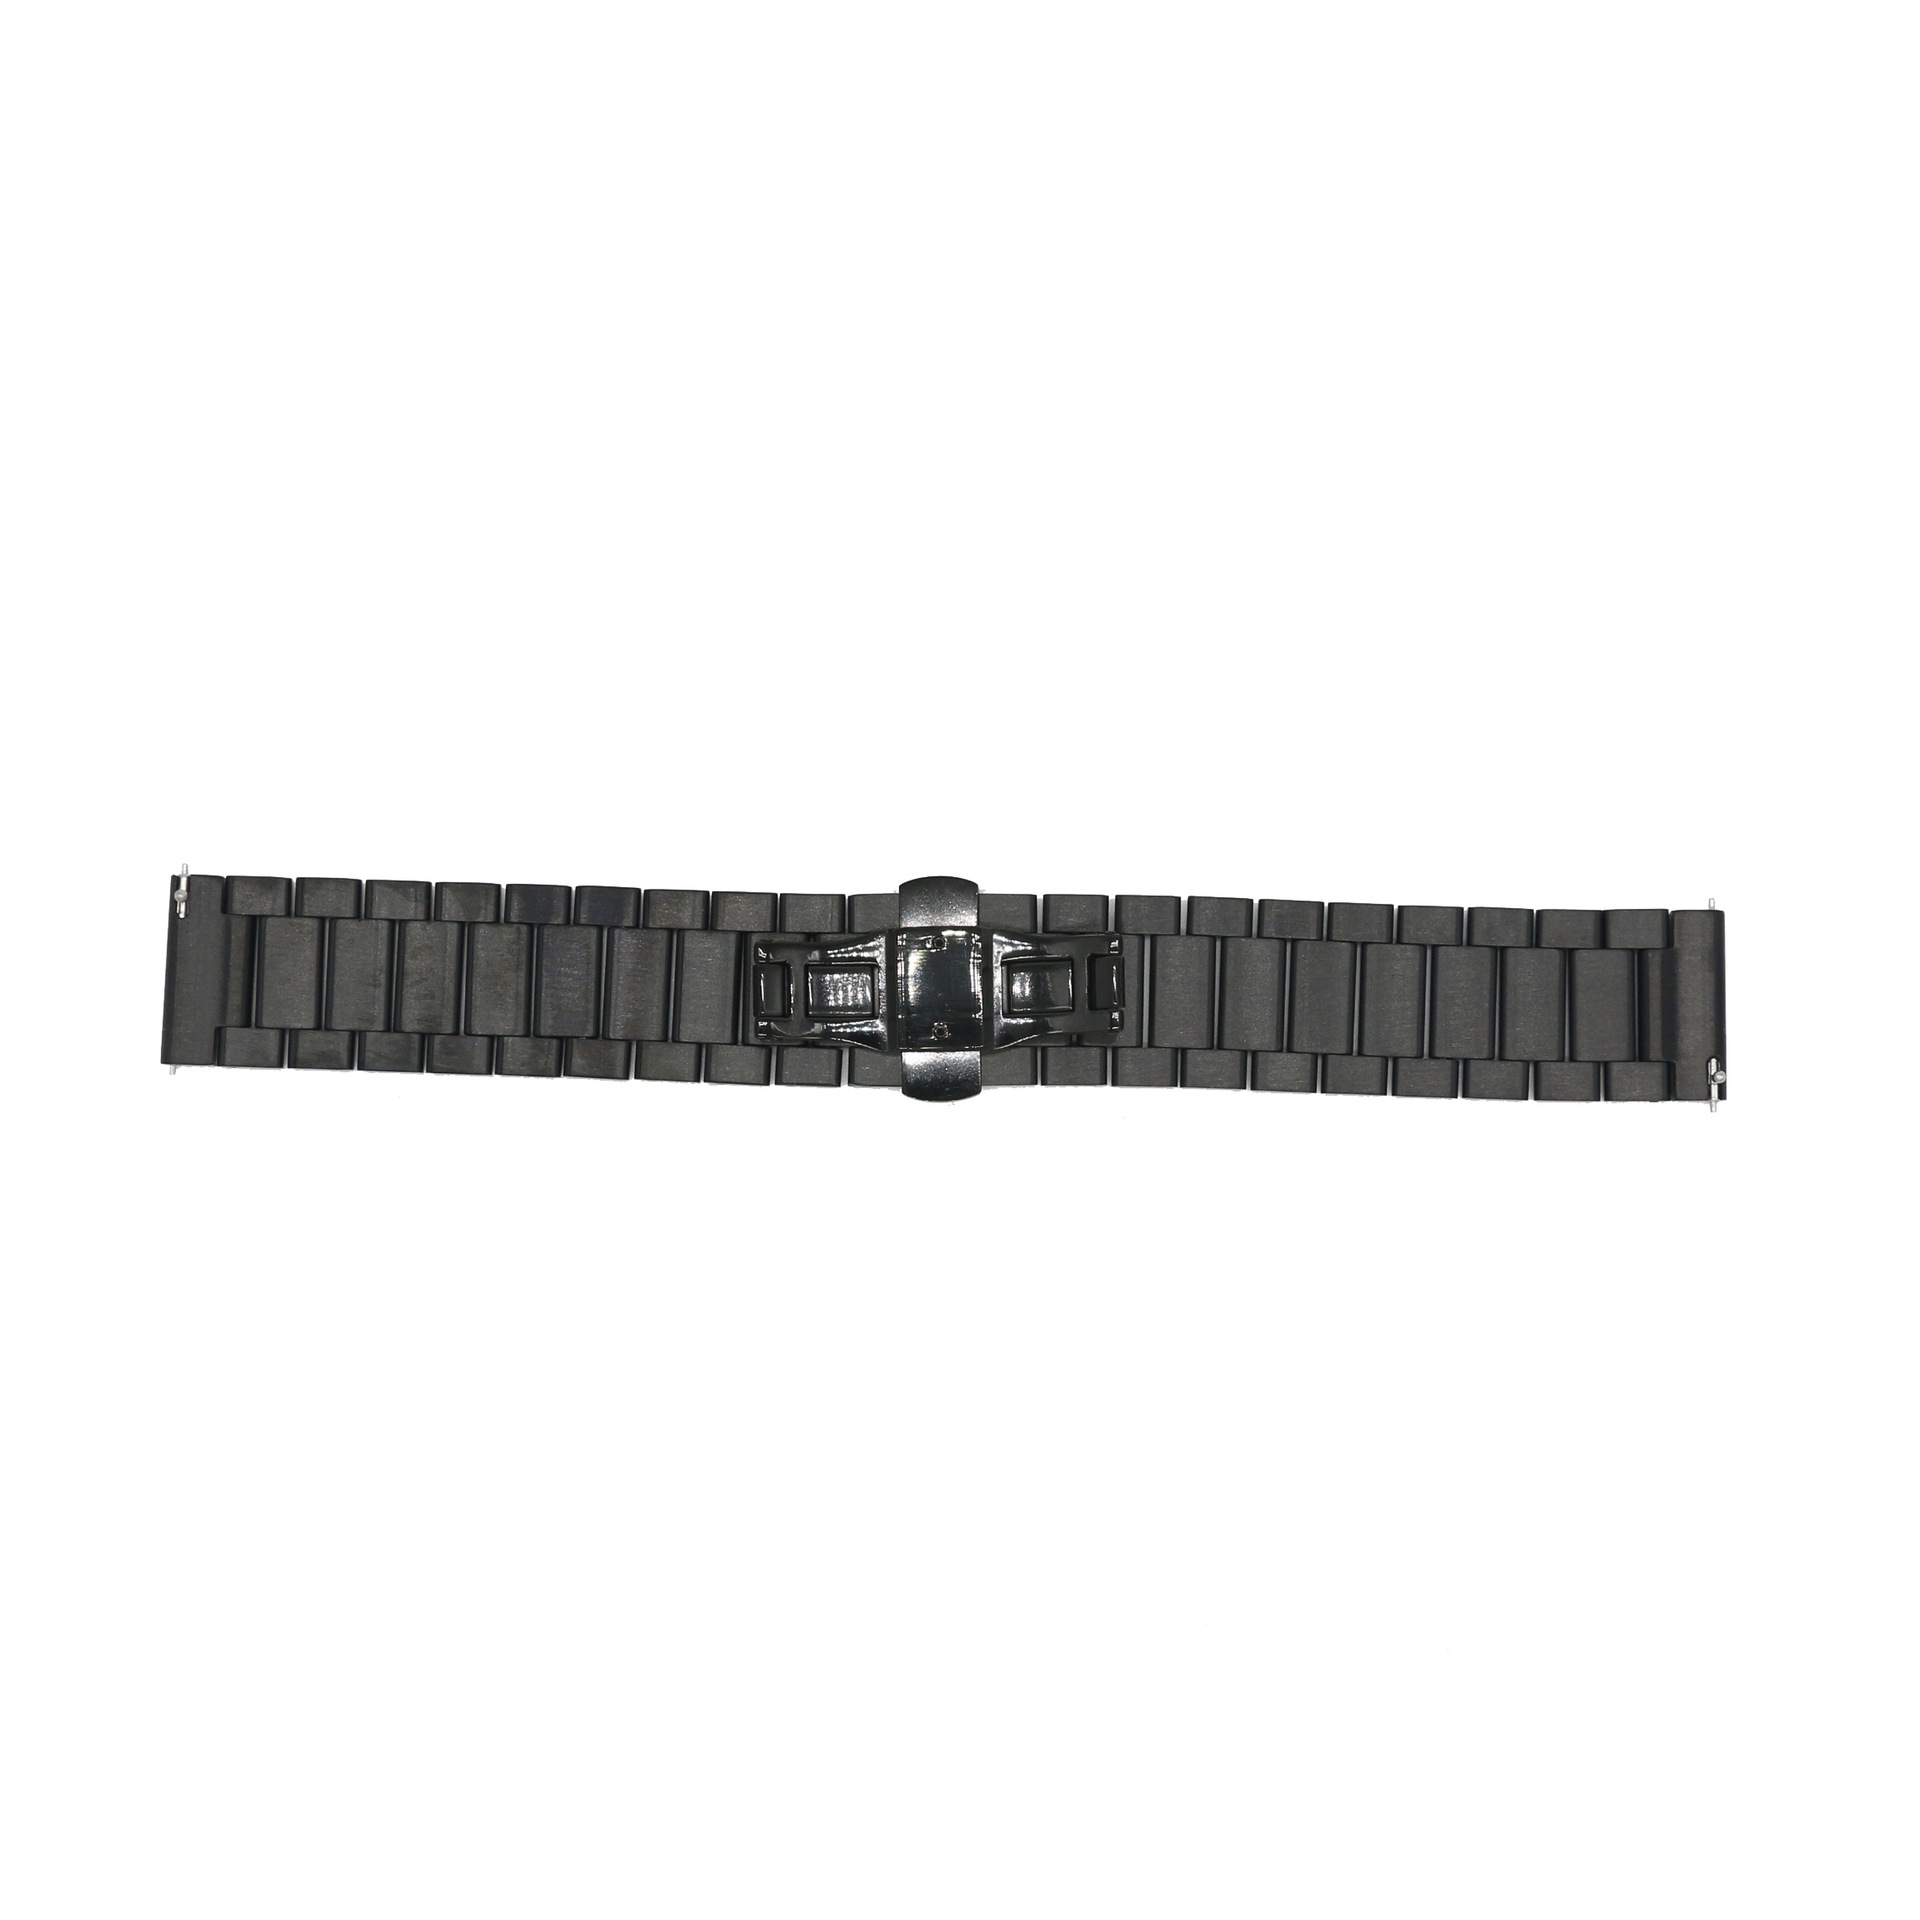 Dây đồng hồ samsung Gear S3 Frontier Classic/Galaxy Watch 46mm - PKDDH22KL01